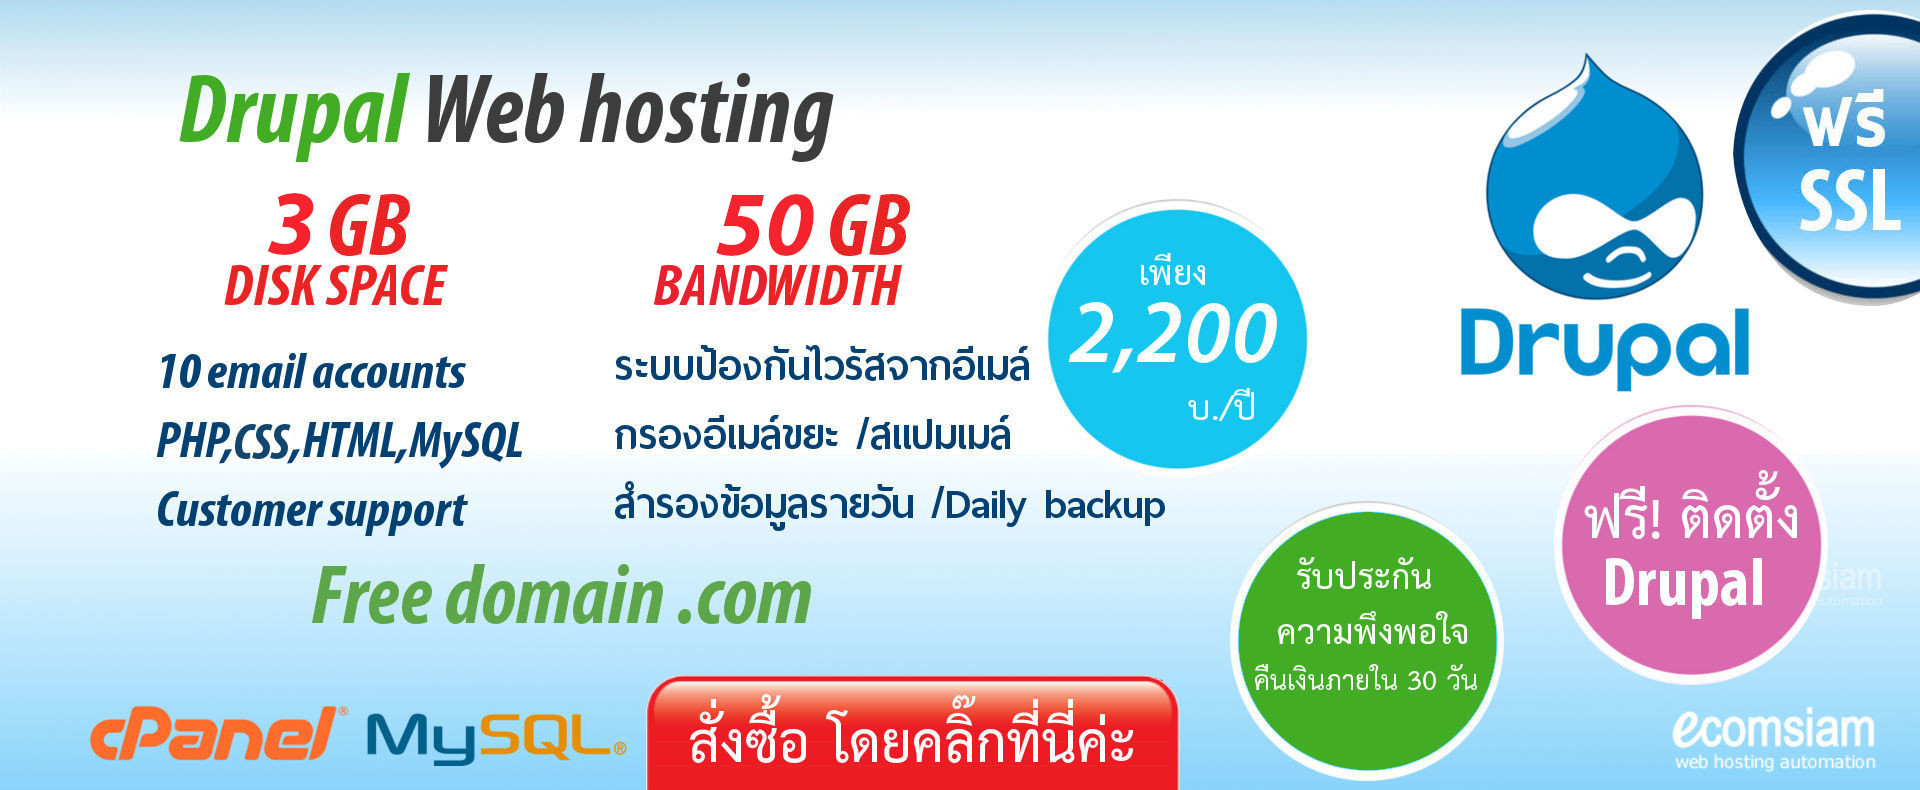 web hosting thai เว็บโฮสติ้งไทย ฟรีโดเมนเนม ฟรี SSL- drupal web hosting thailand free domain-drupal web hosting-banner แนะนำเว็บโฮสติ้ง บริการลูกค้า ดูแลดี โดย thailandwebhost.com